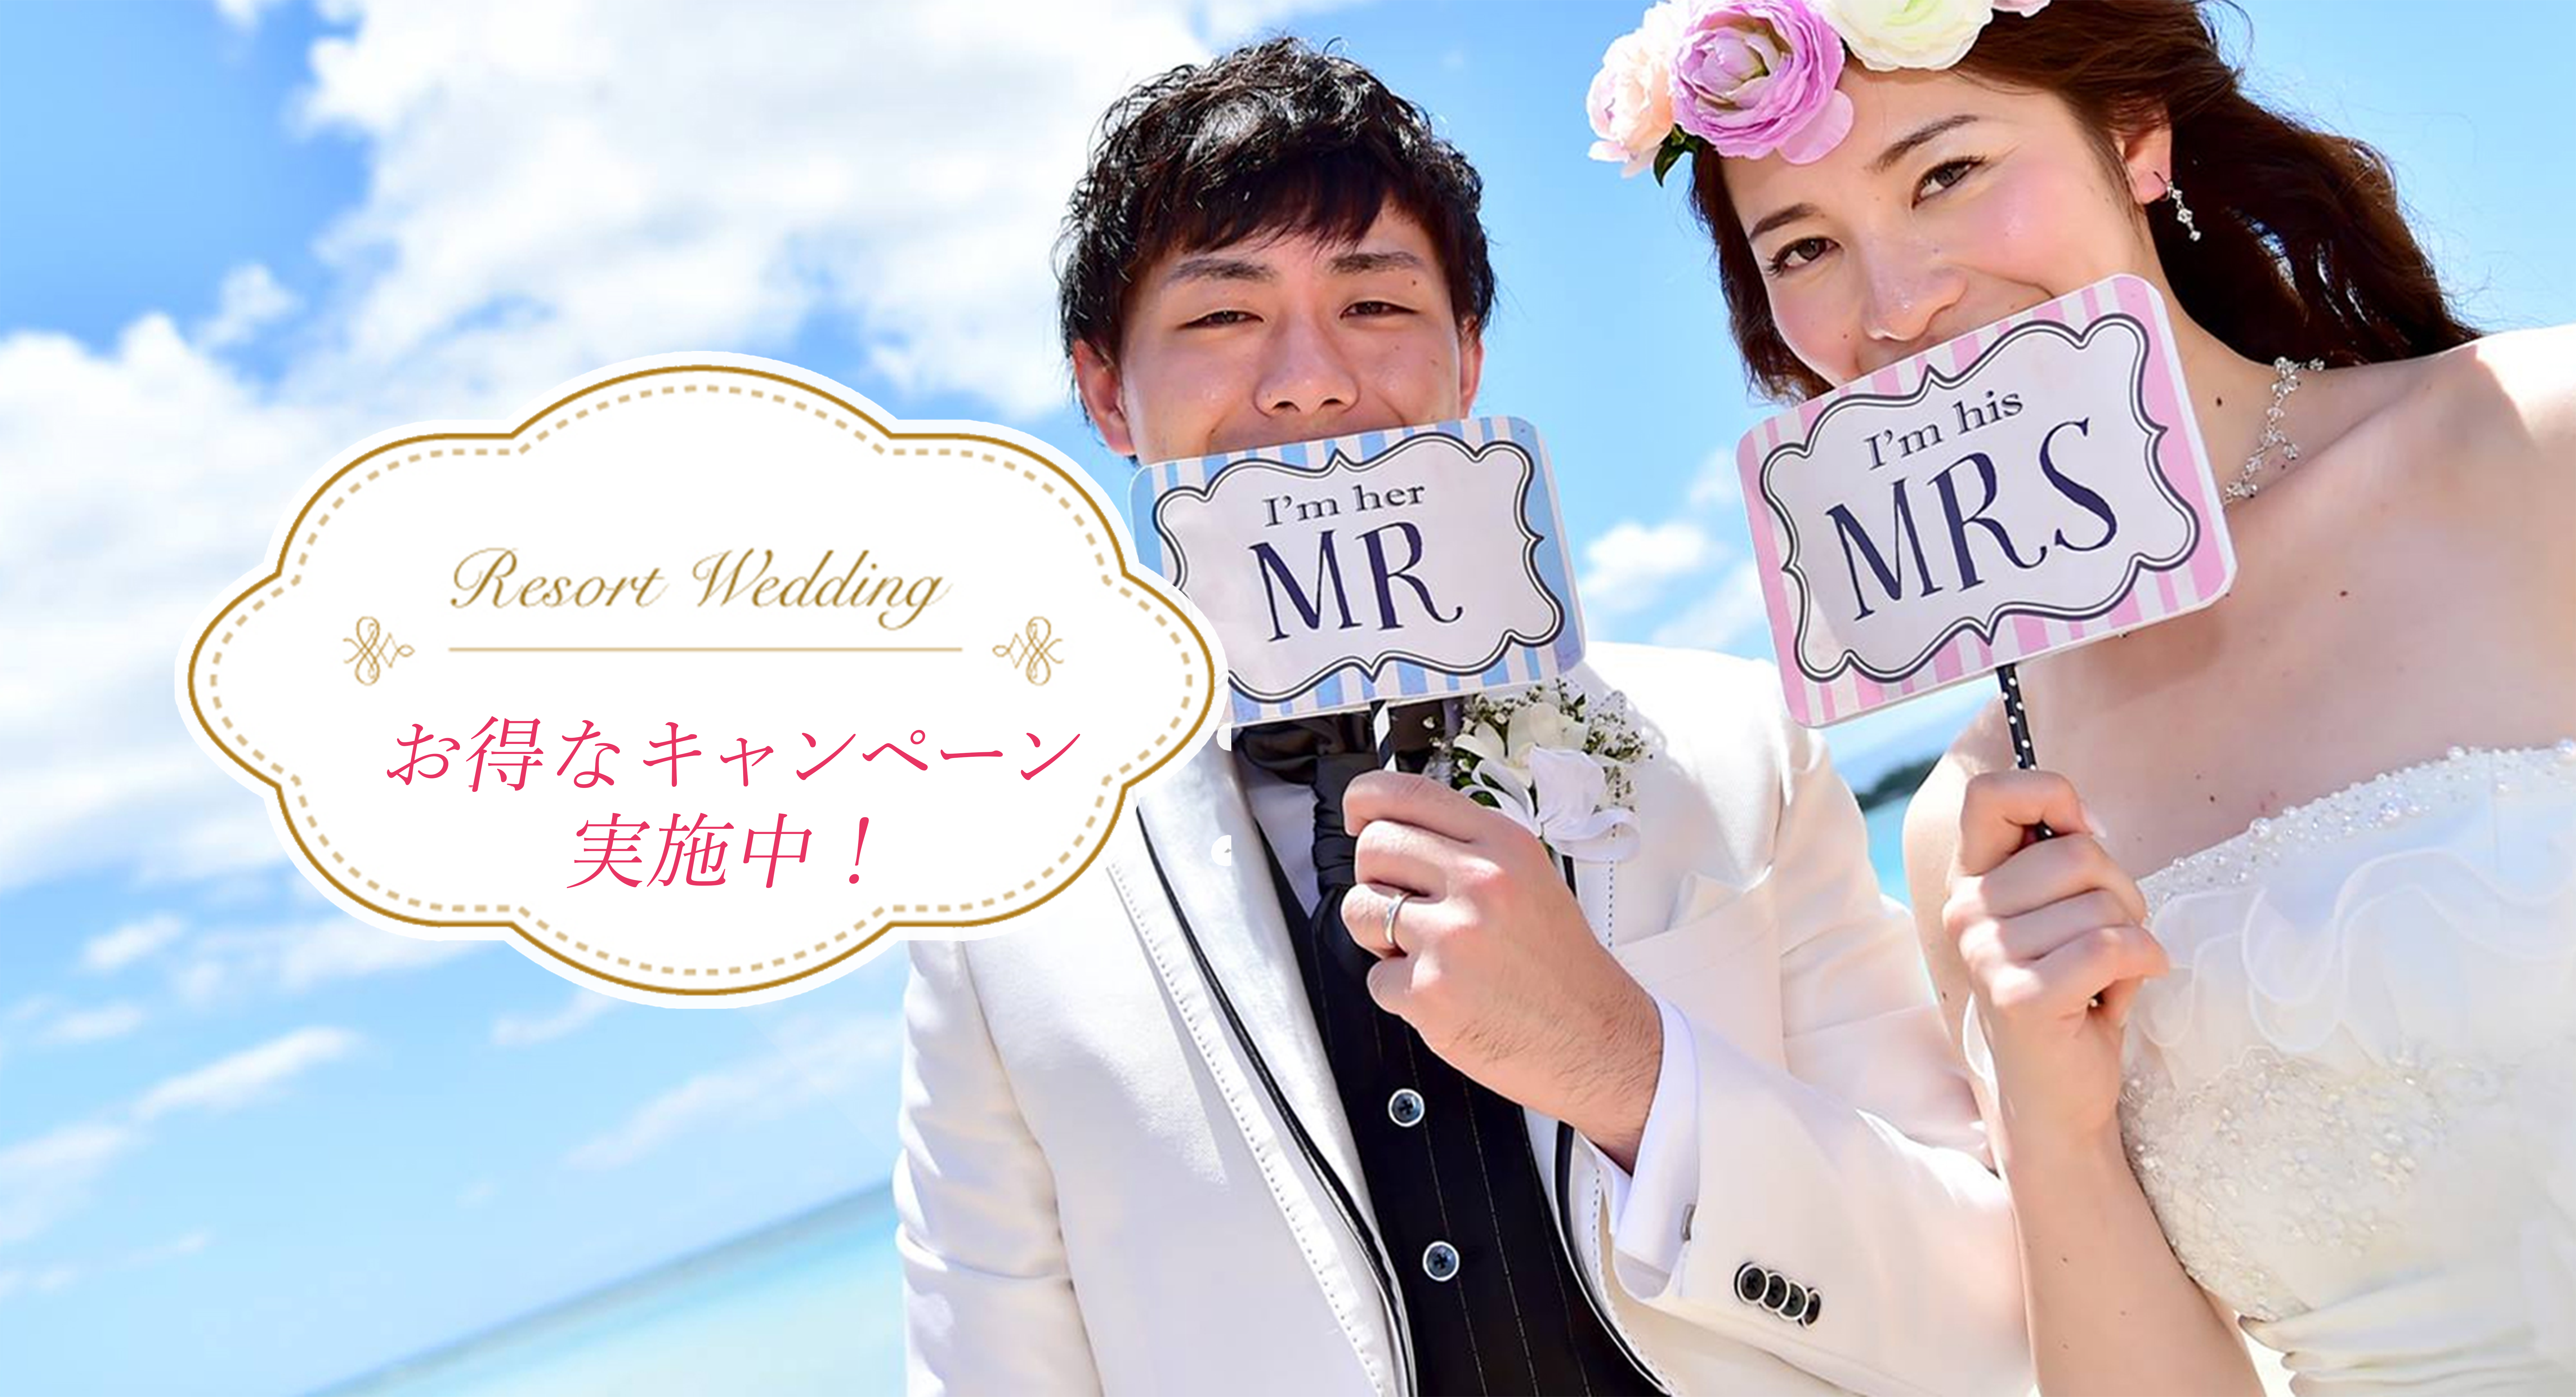 Resort Wedding 98,000円～